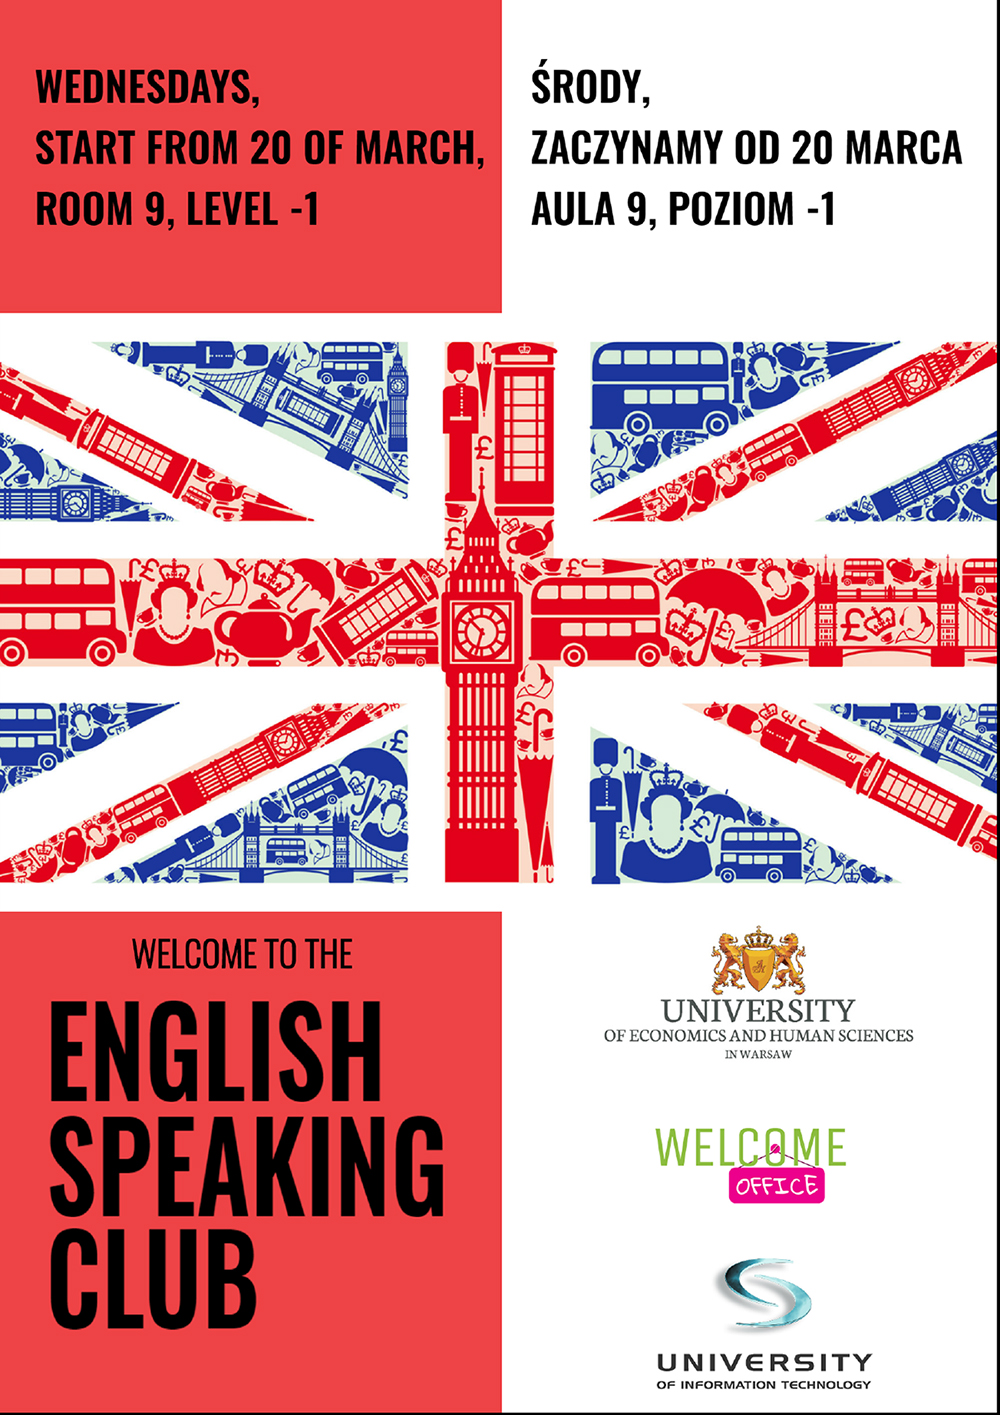 english-speaking-club-welcomeoffice